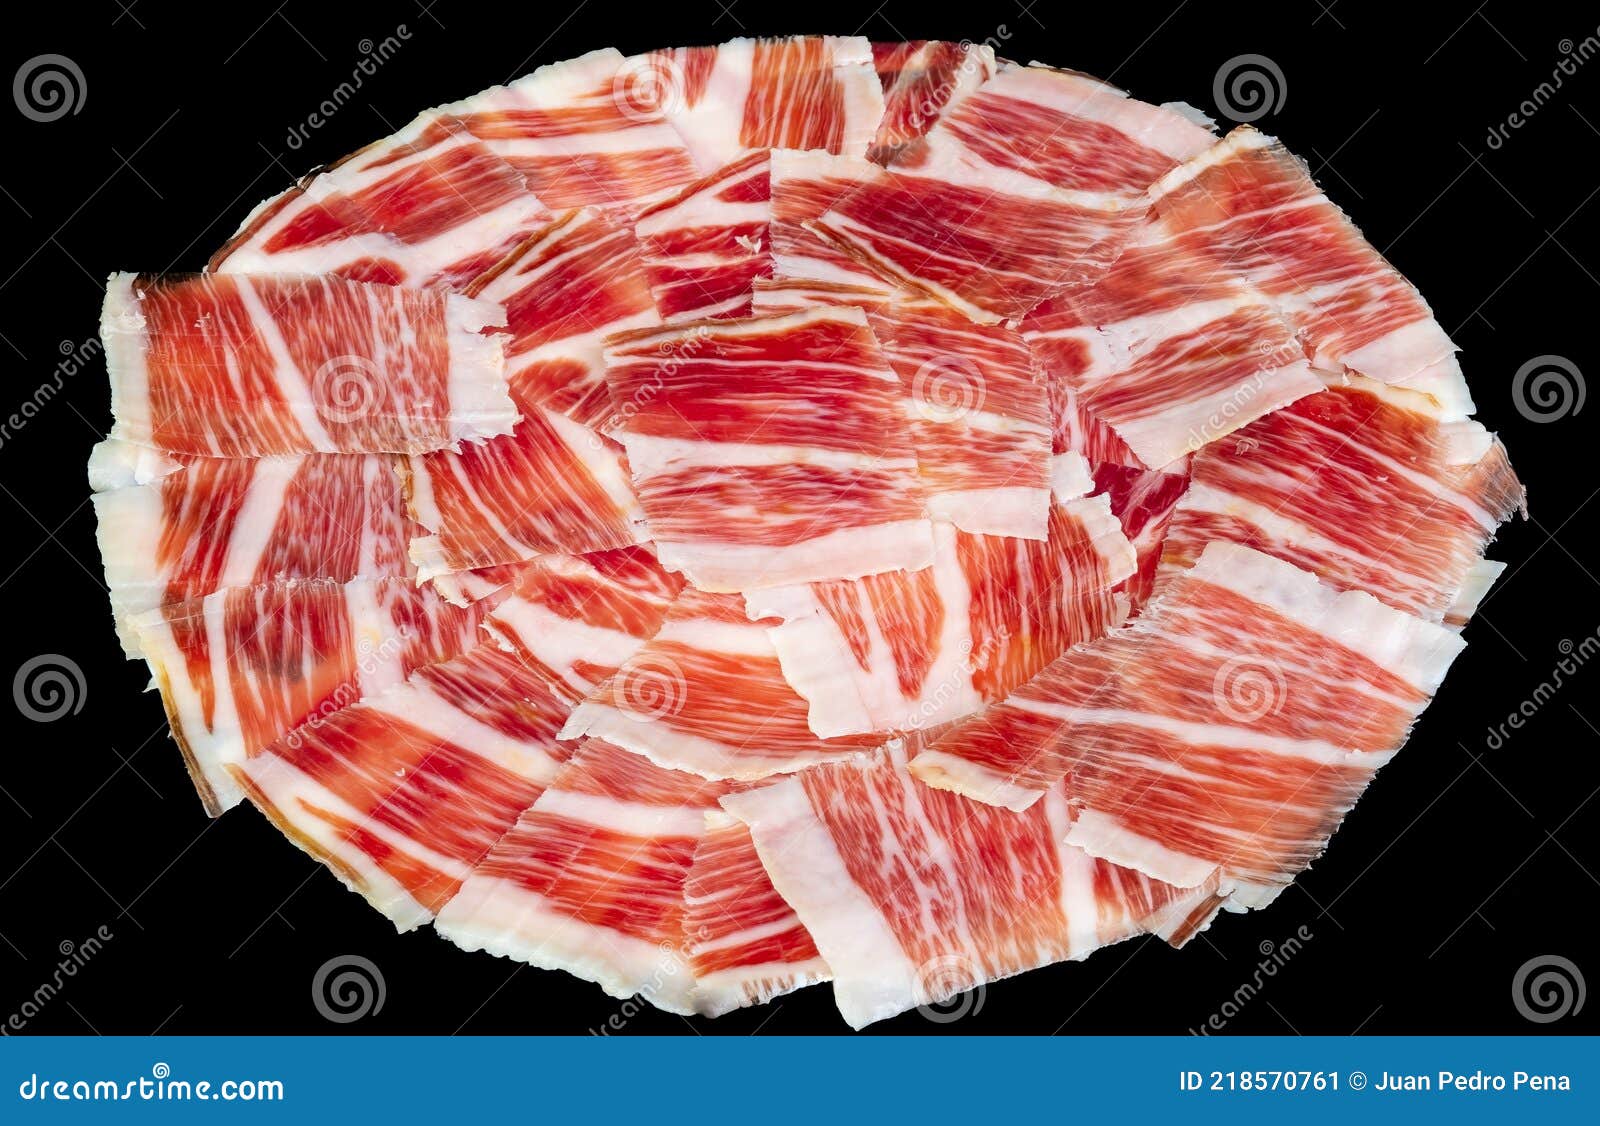 plate of iberian pork ham on black background